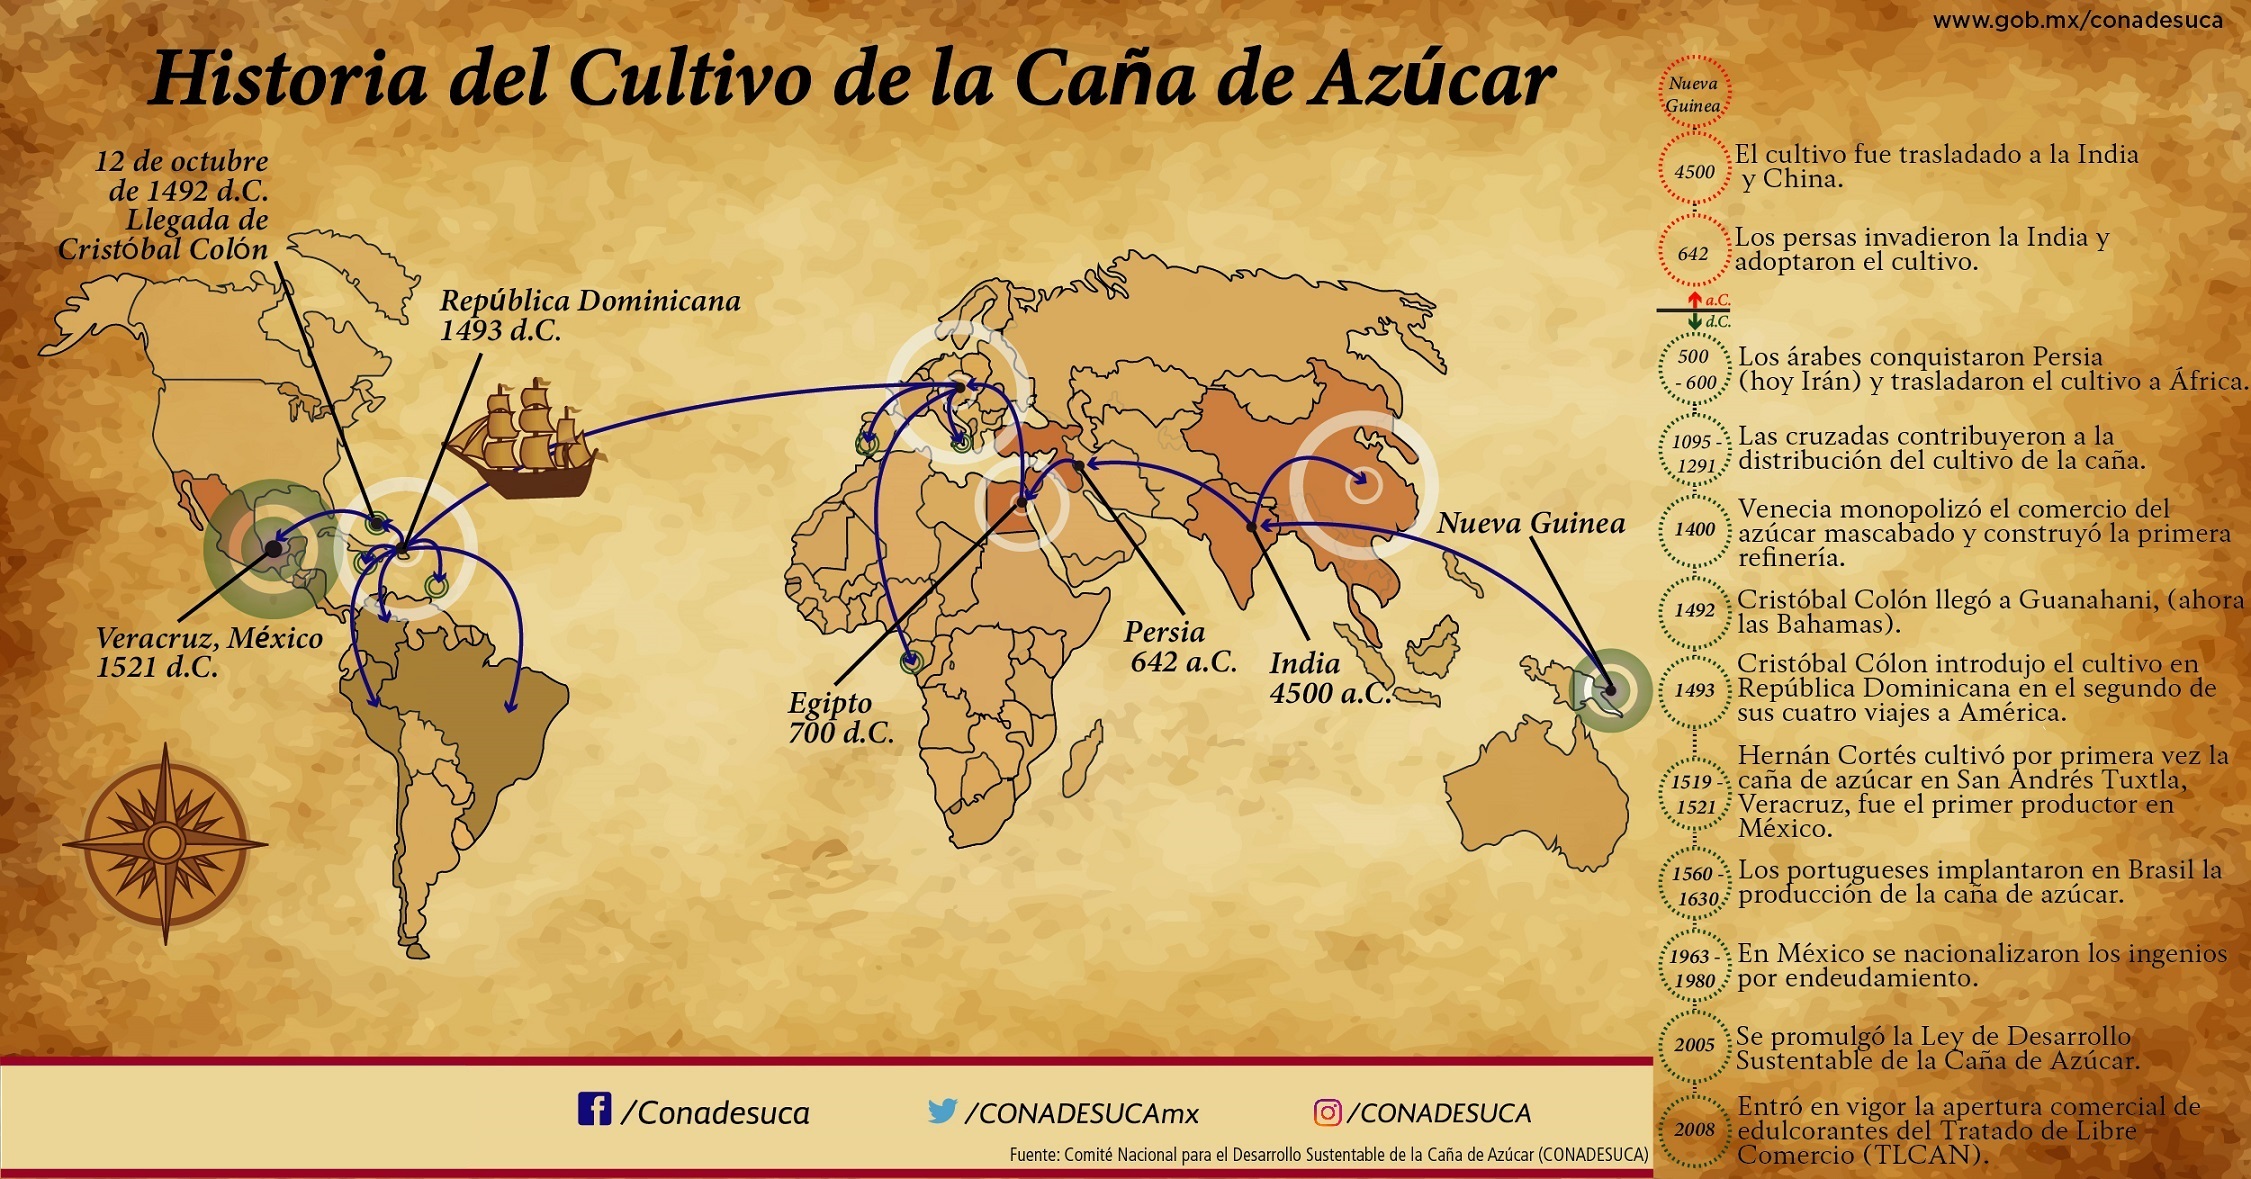 /cms/uploads/image/file/700342/5-Infograf_a_Mapa_historia_del_cultivo_de_ca_a_de_az_car.jpg